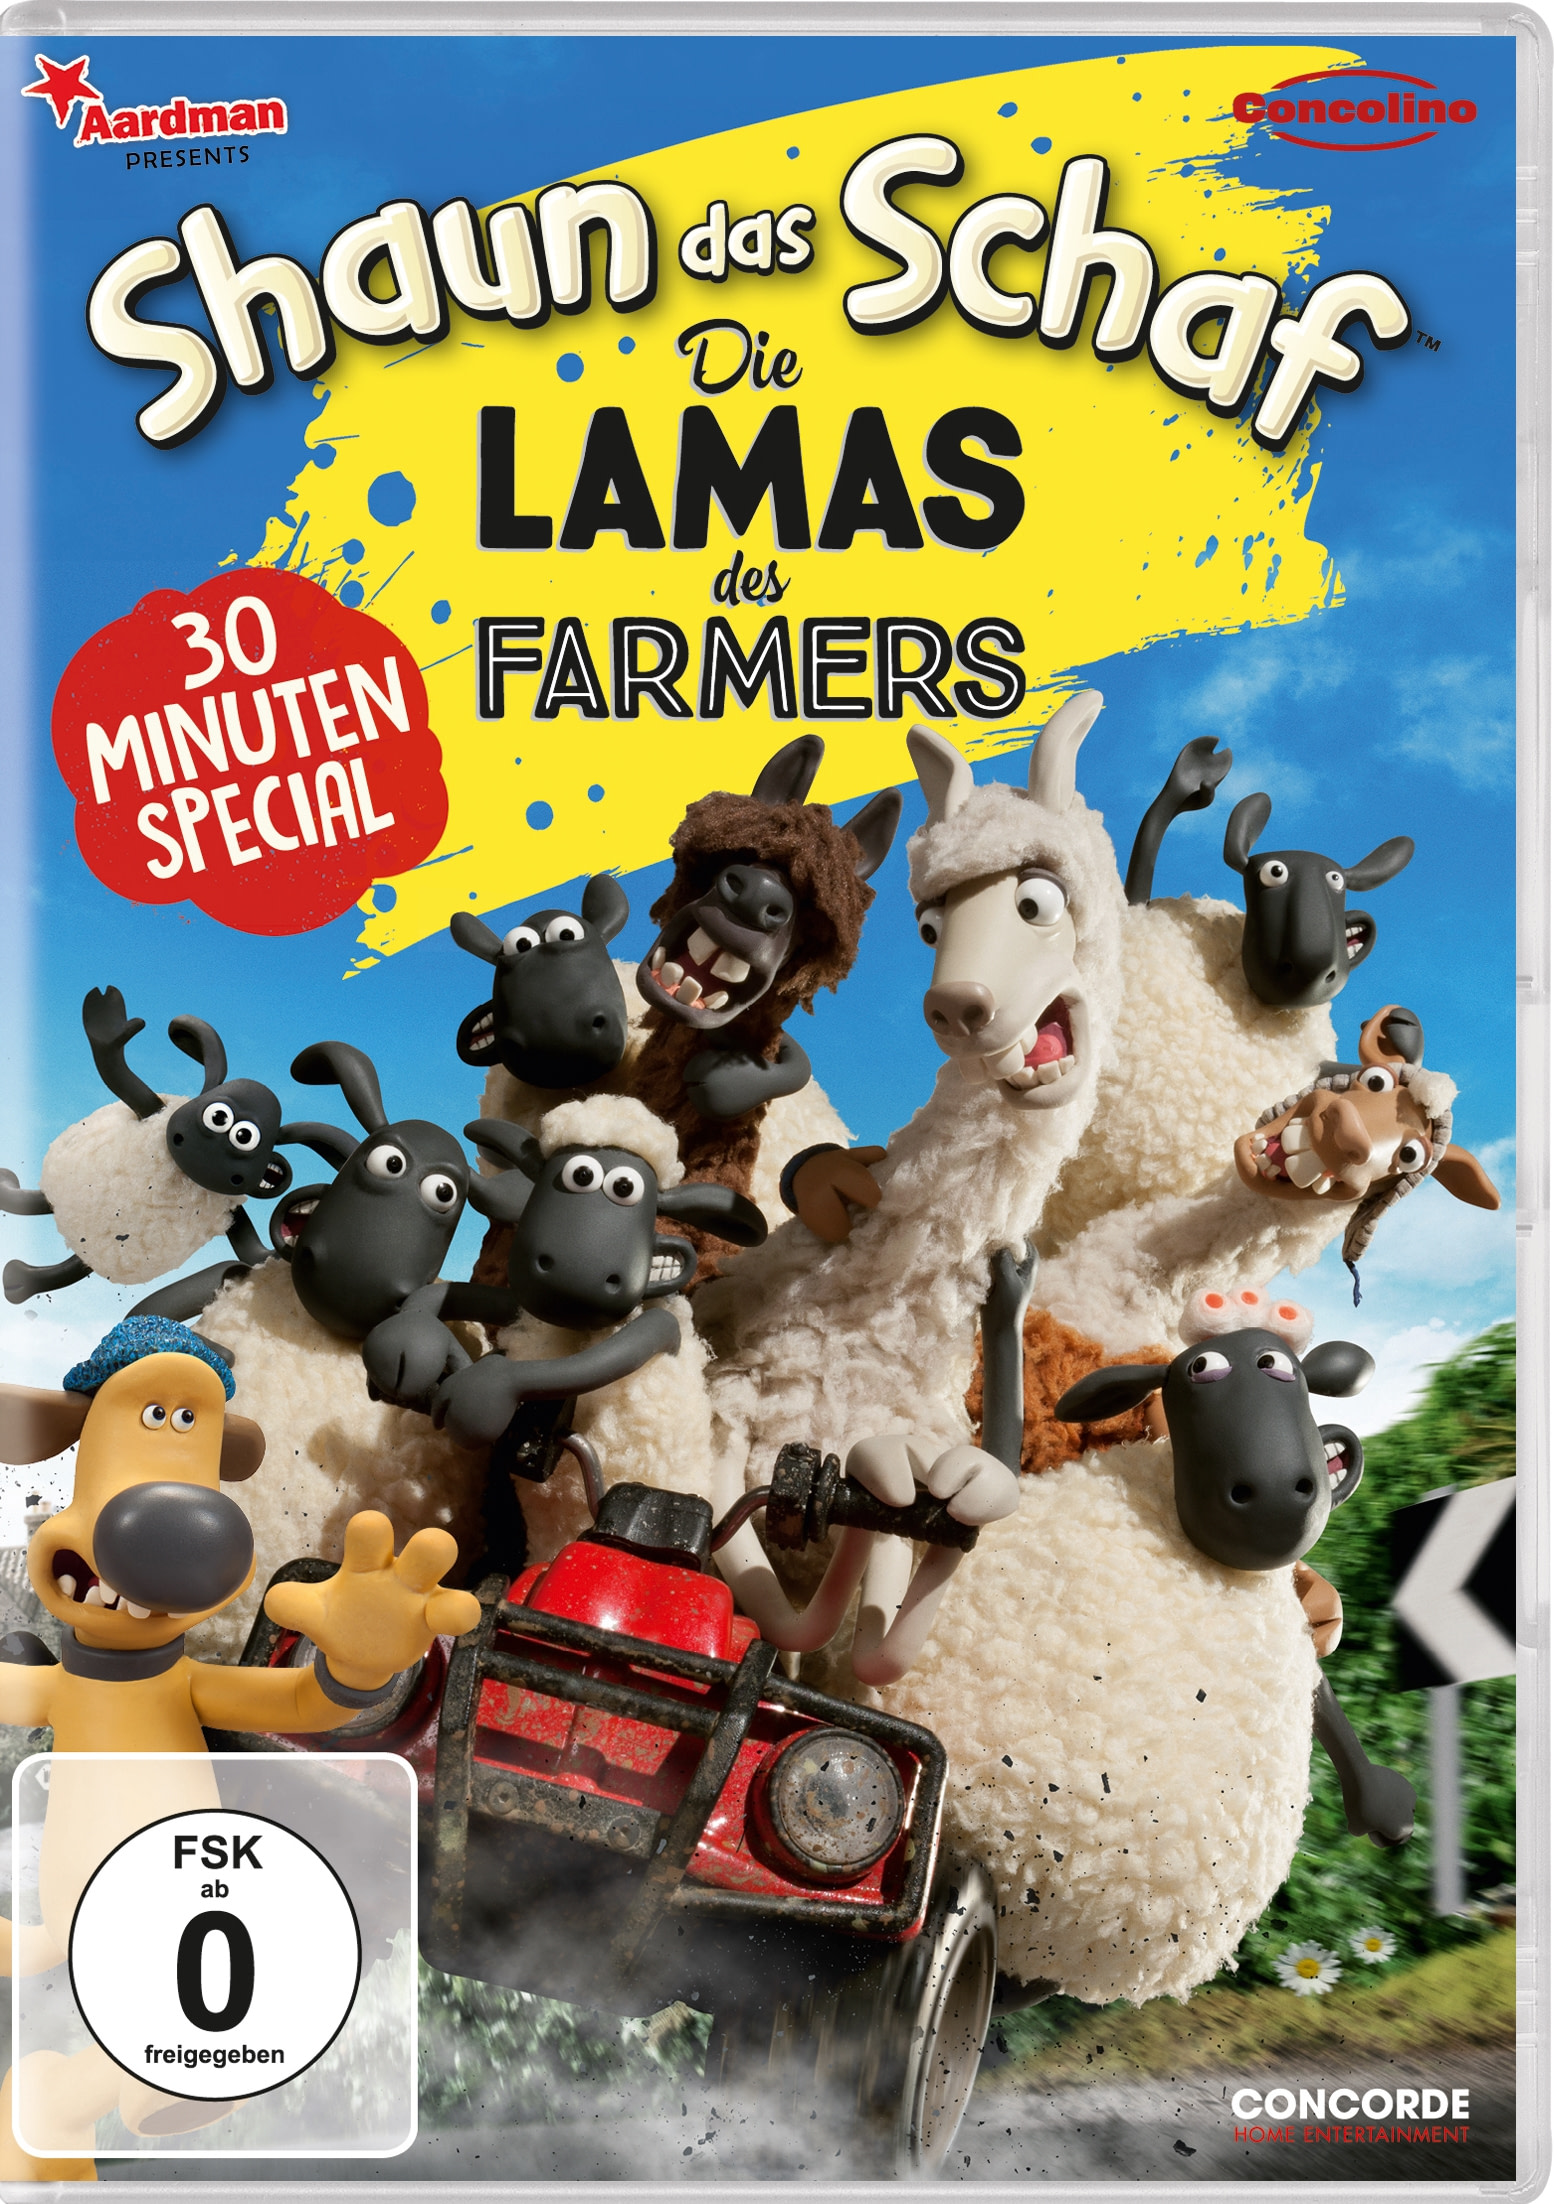 Shaun das Schaf Farmers Lamas DVD